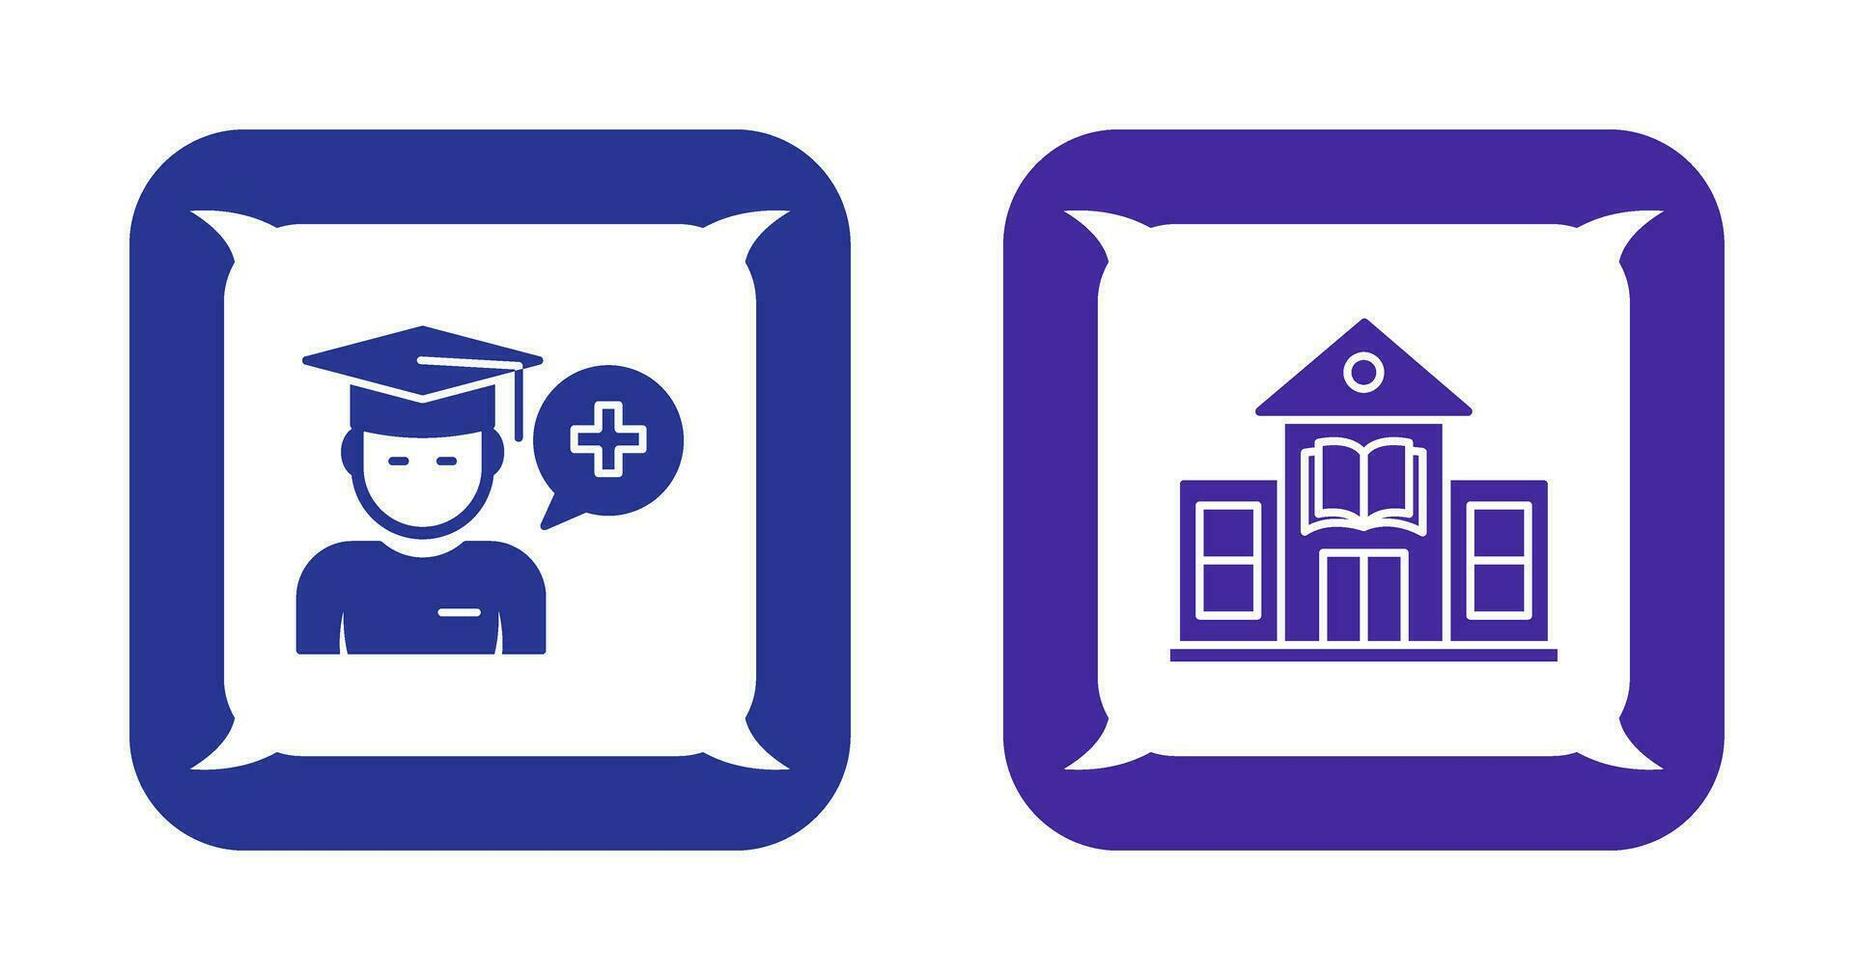 Medicine Faculty and Library Building Icon vector